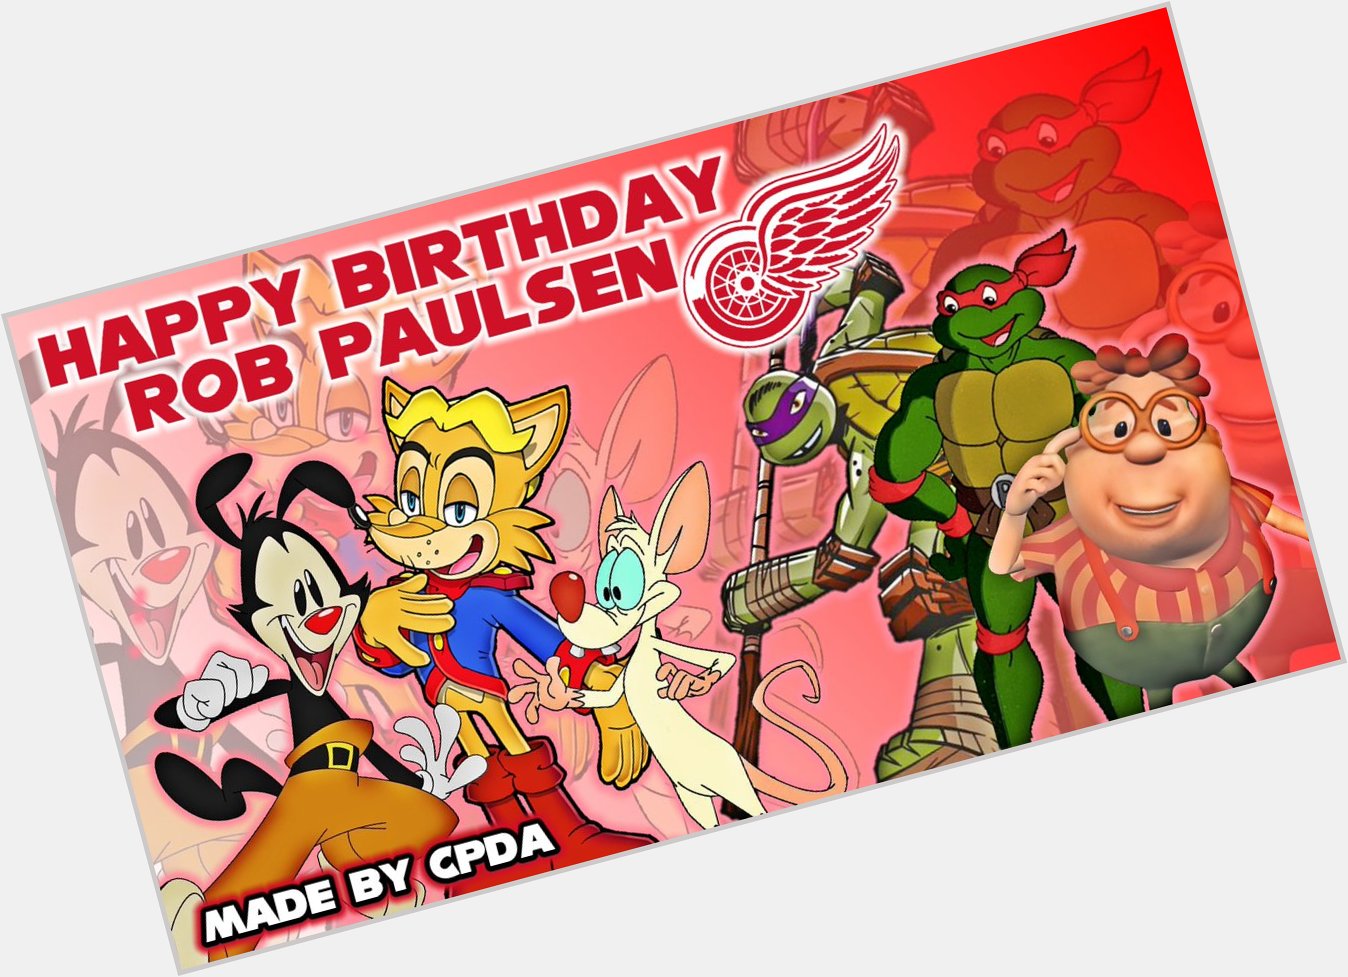 Happy birthday to Rob Paulsen 